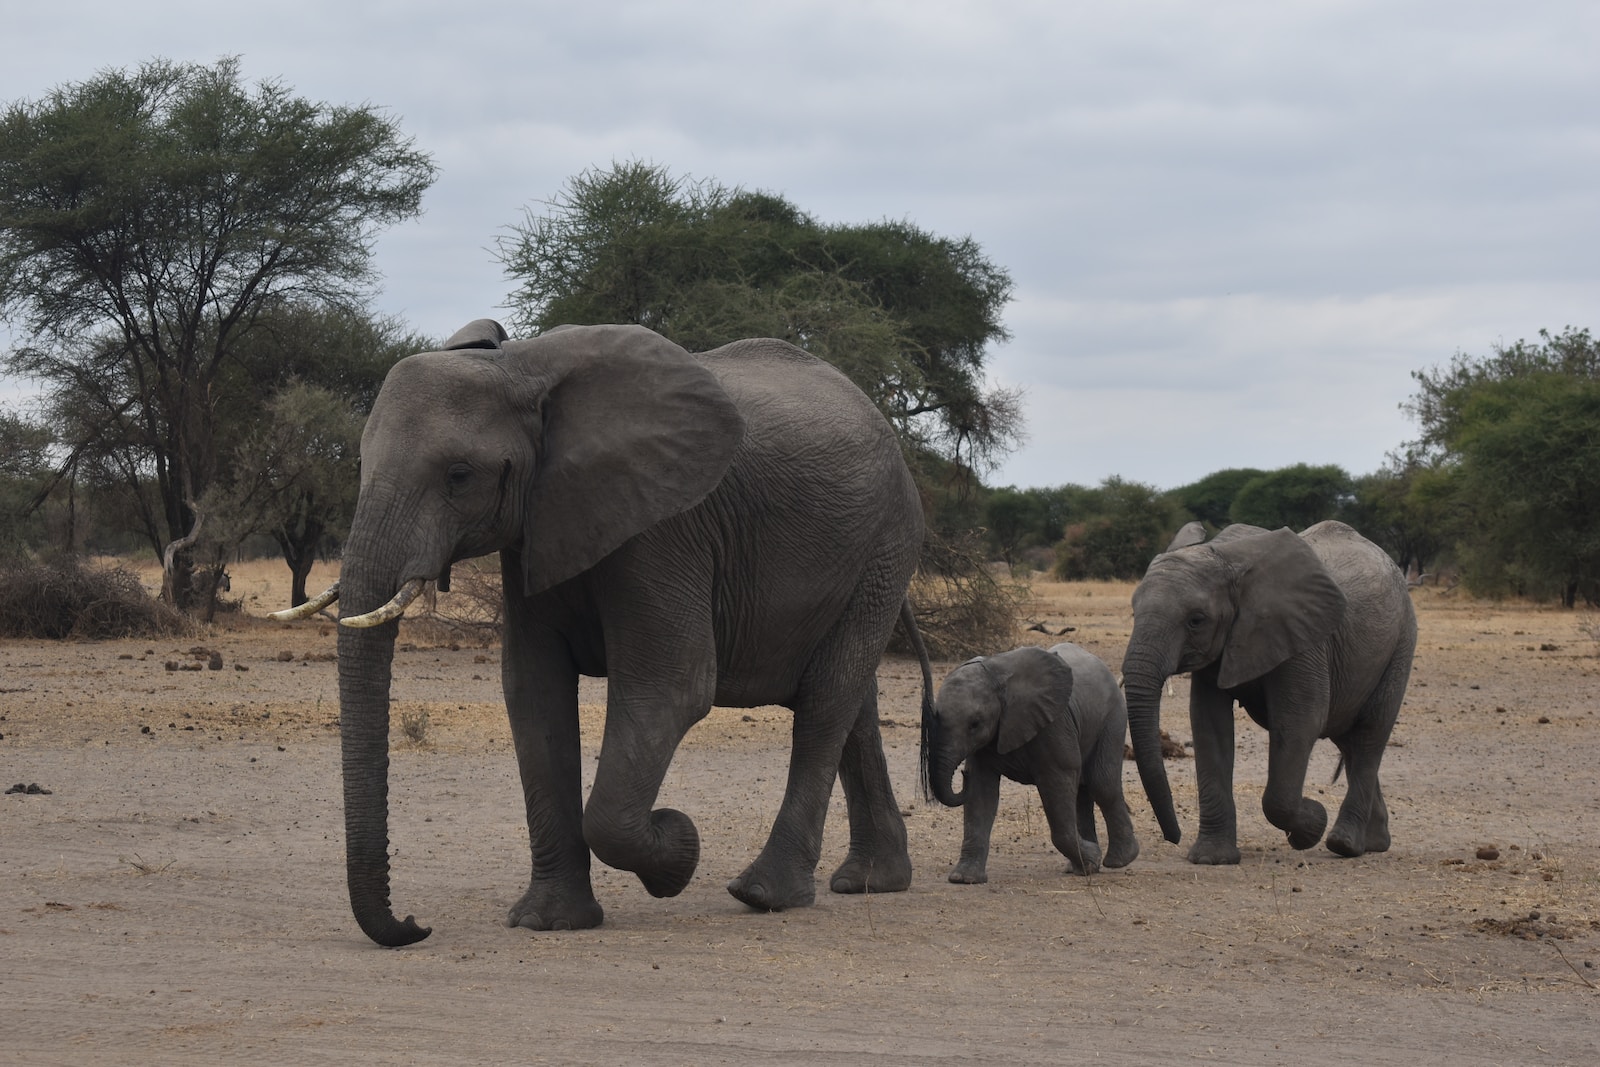 a group of elephants walk across a dirt road